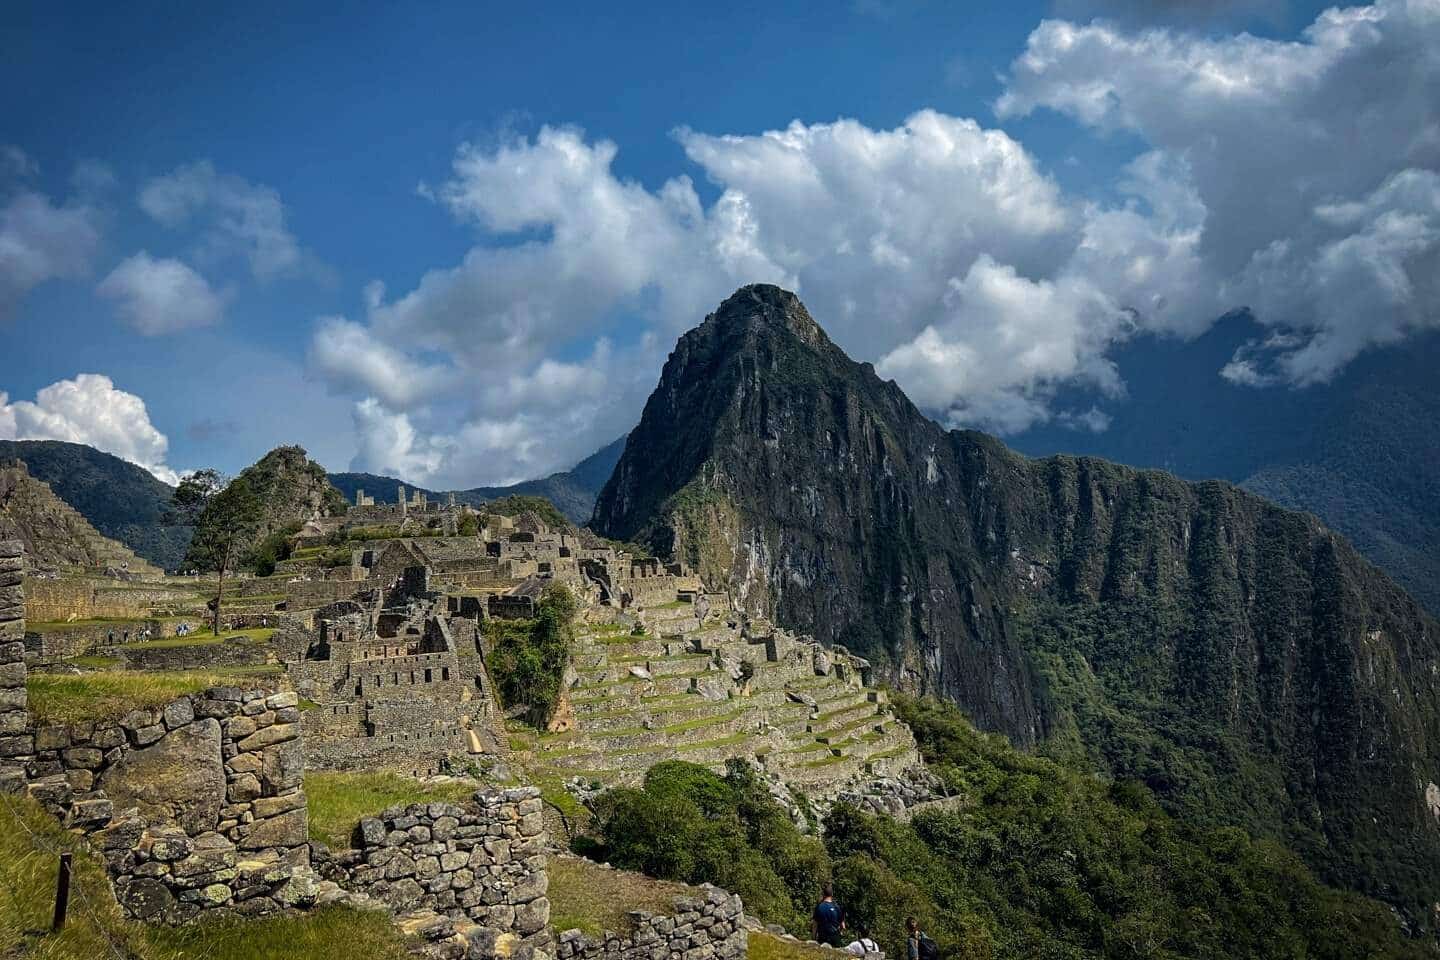 Arriving to Machu Picchu